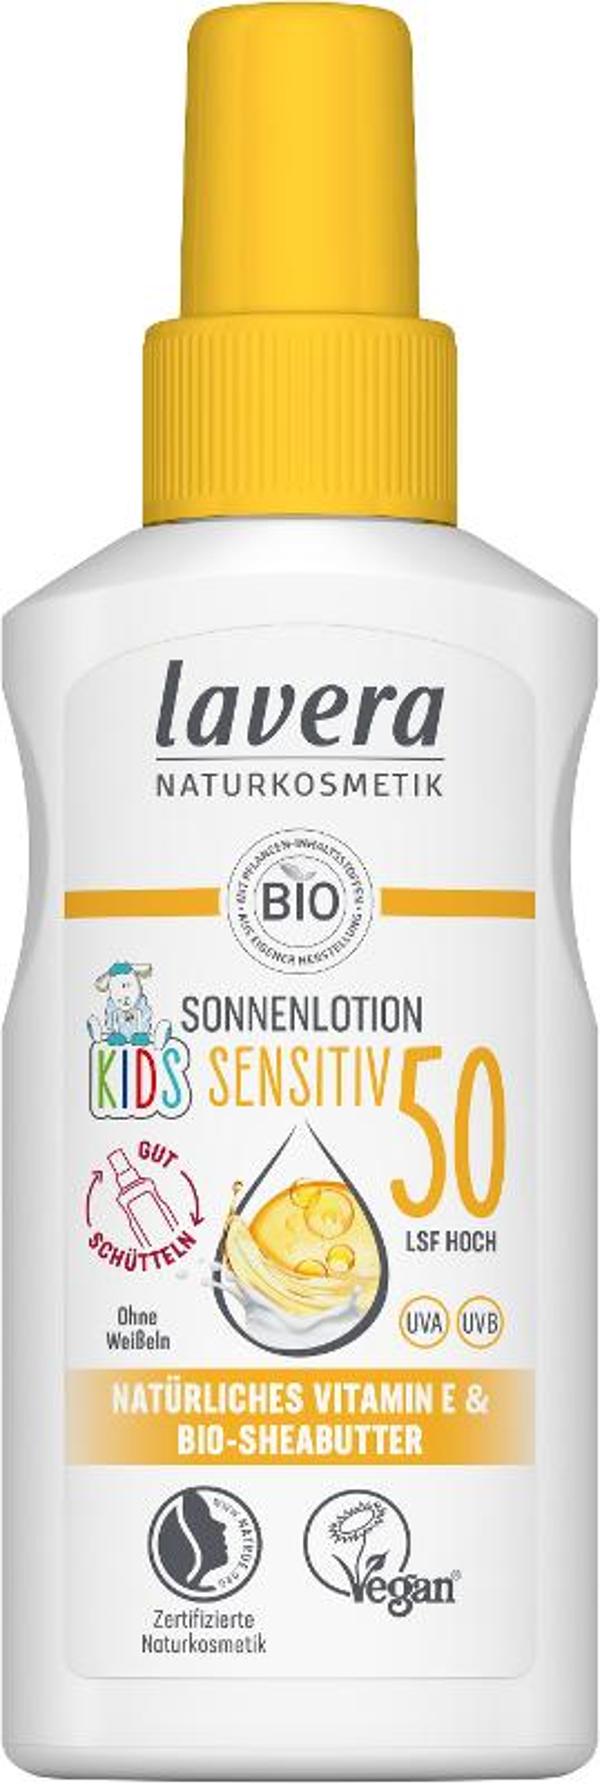 Produktfoto zu Sonnenlotion Sensitiv Kids LSF 50